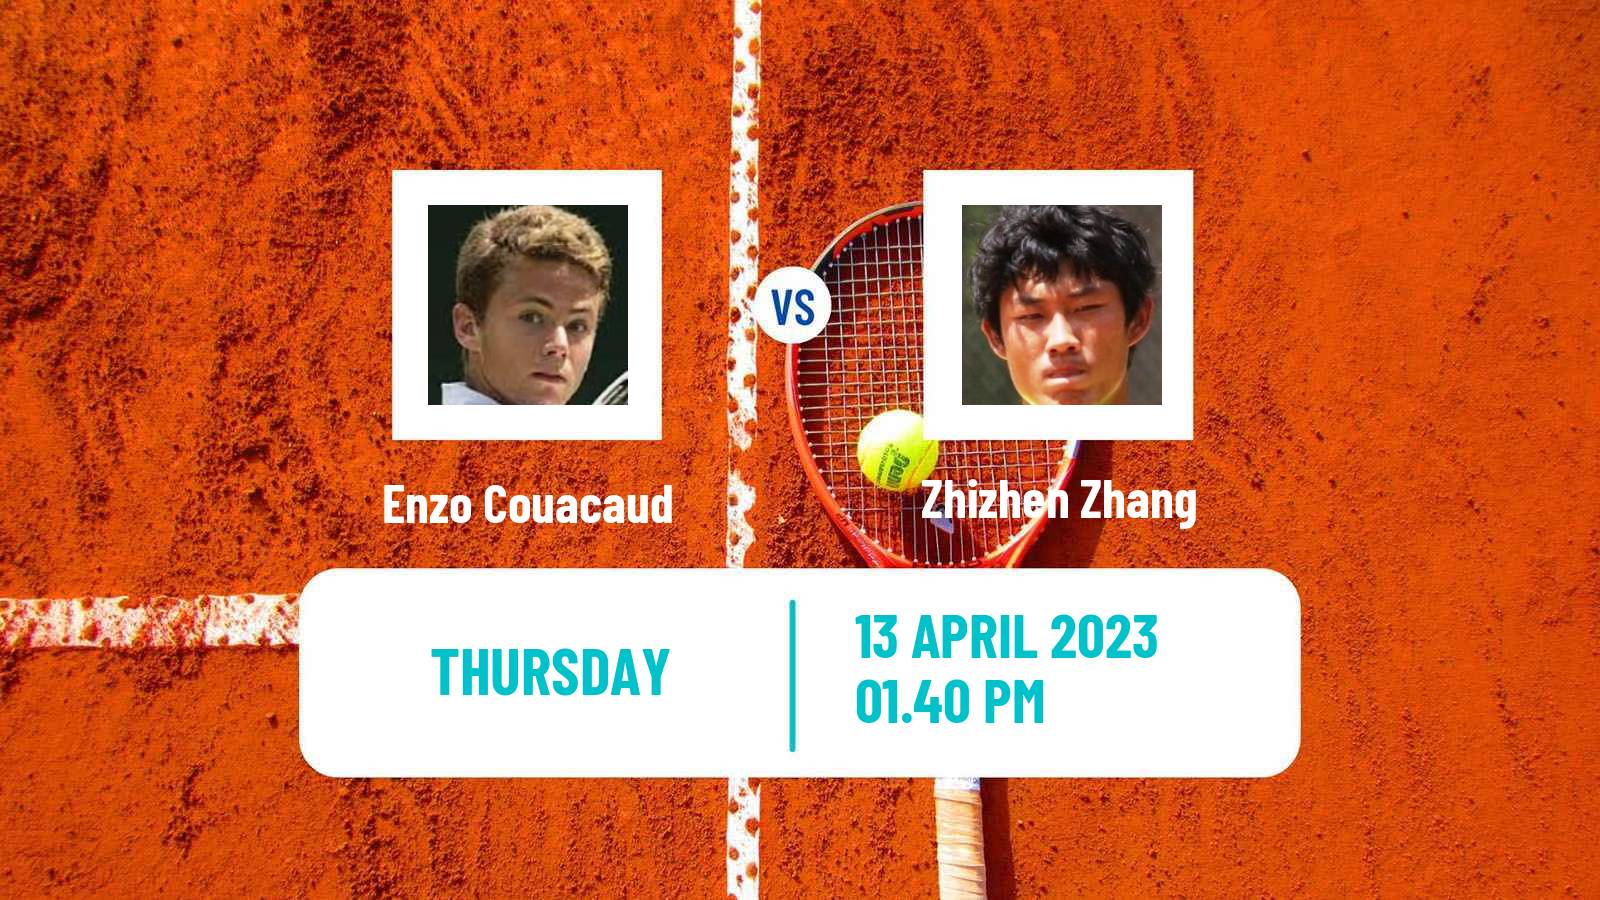 Tennis ATP Challenger Enzo Couacaud - Zhizhen Zhang